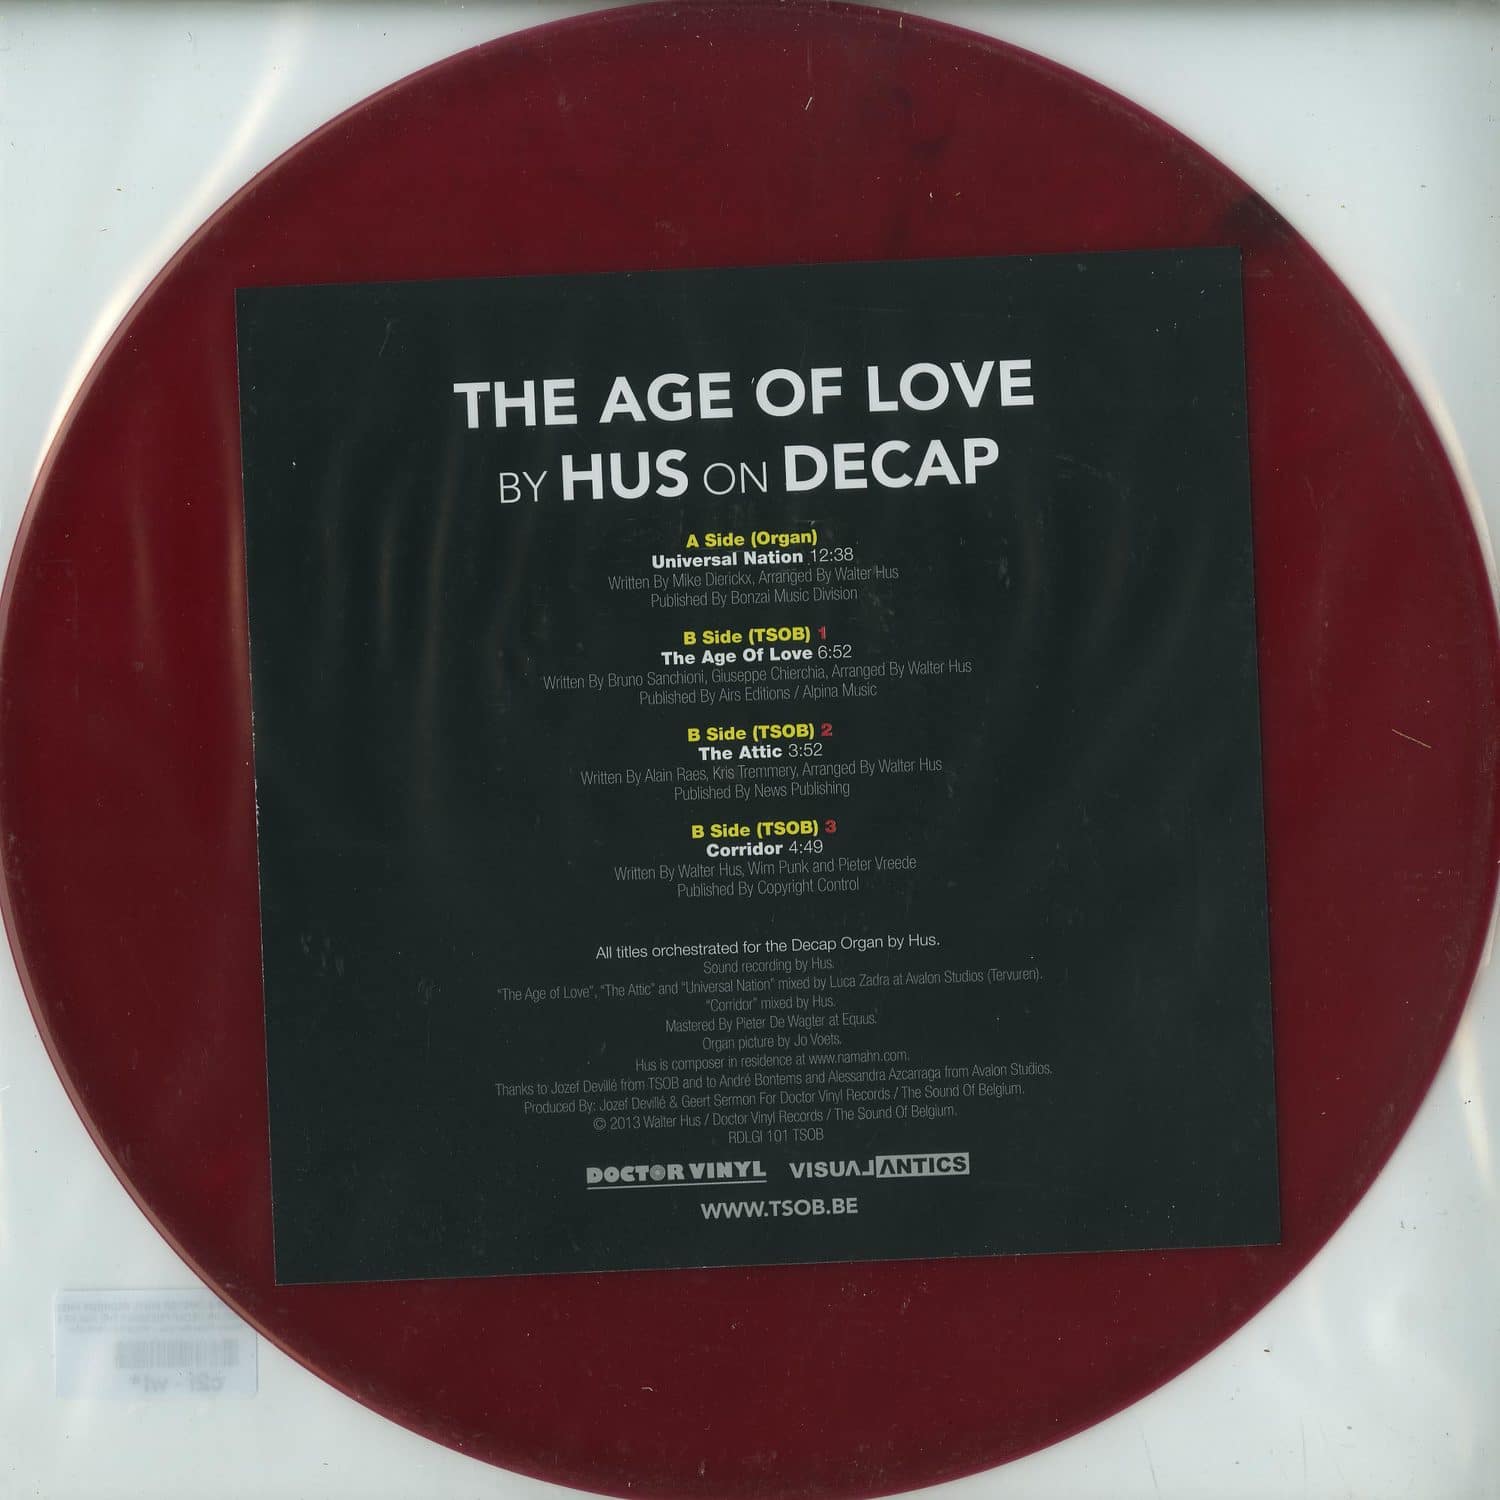 Tsob & Doctor Vinyl Records Present - HUS ON DECAP PRESENTS THE AGE OF LOVE 